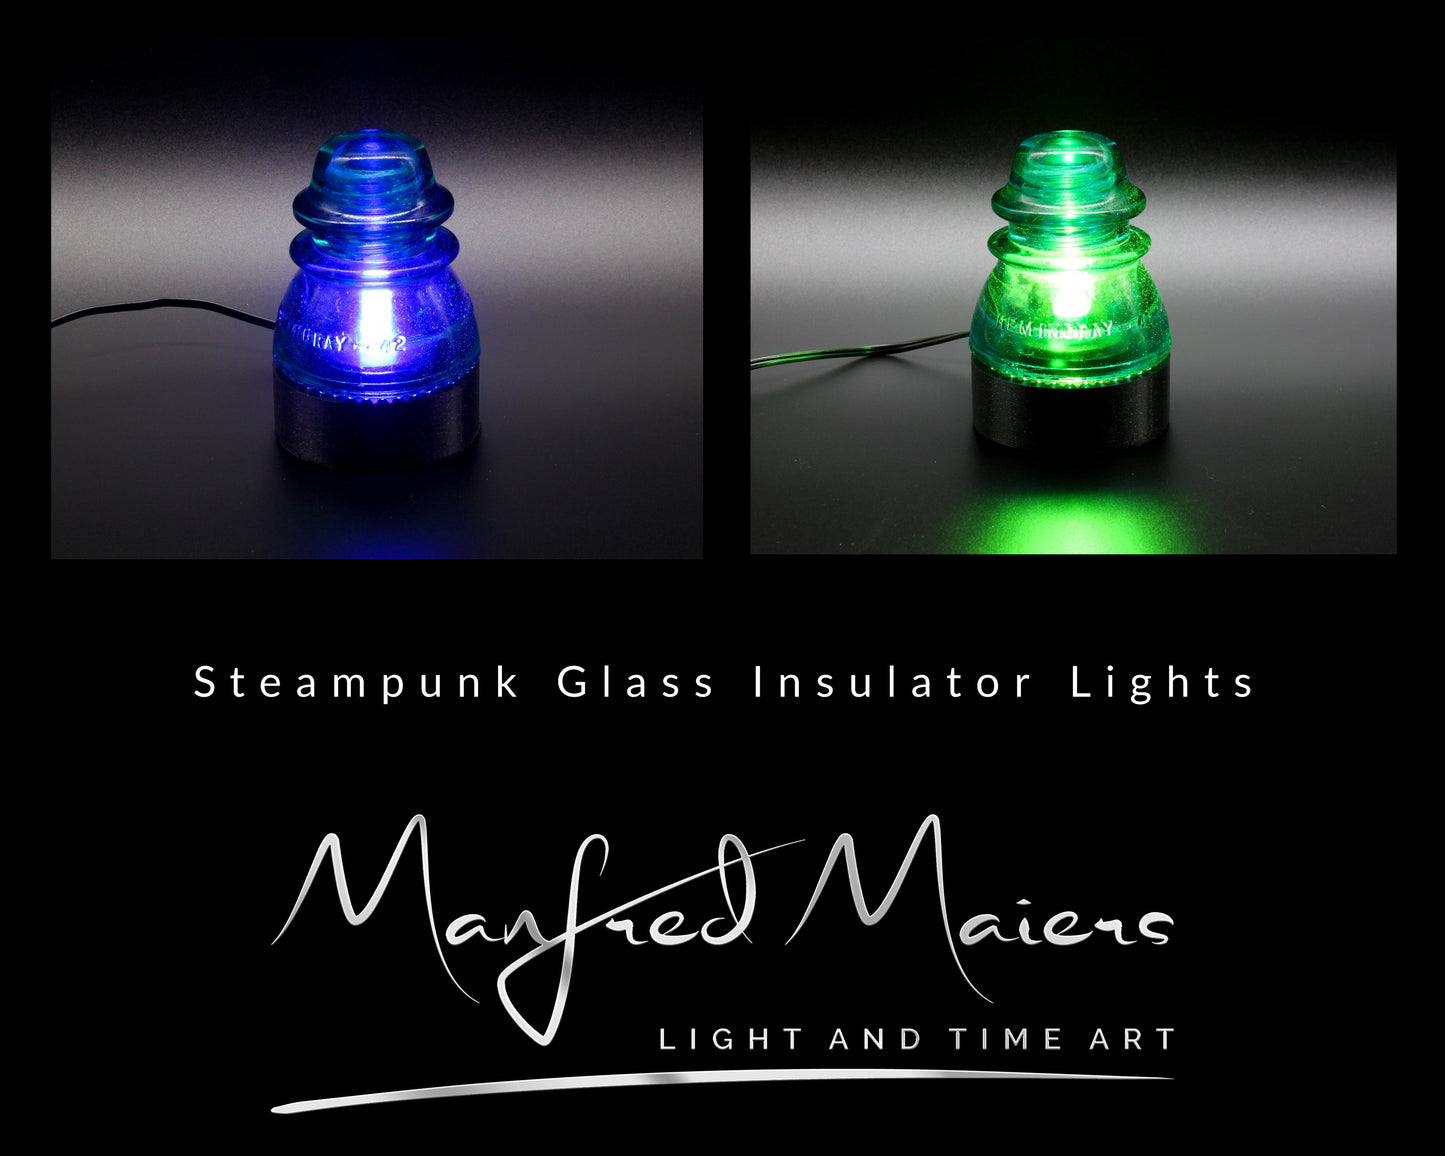 LightAndTimeArt Industrial lamp Hemingray-42 Aqua Insulator Lamp, Industrial Lighting, Man Cave Deco, Neo Victorian Lamp design, Cyberpunk Lamp